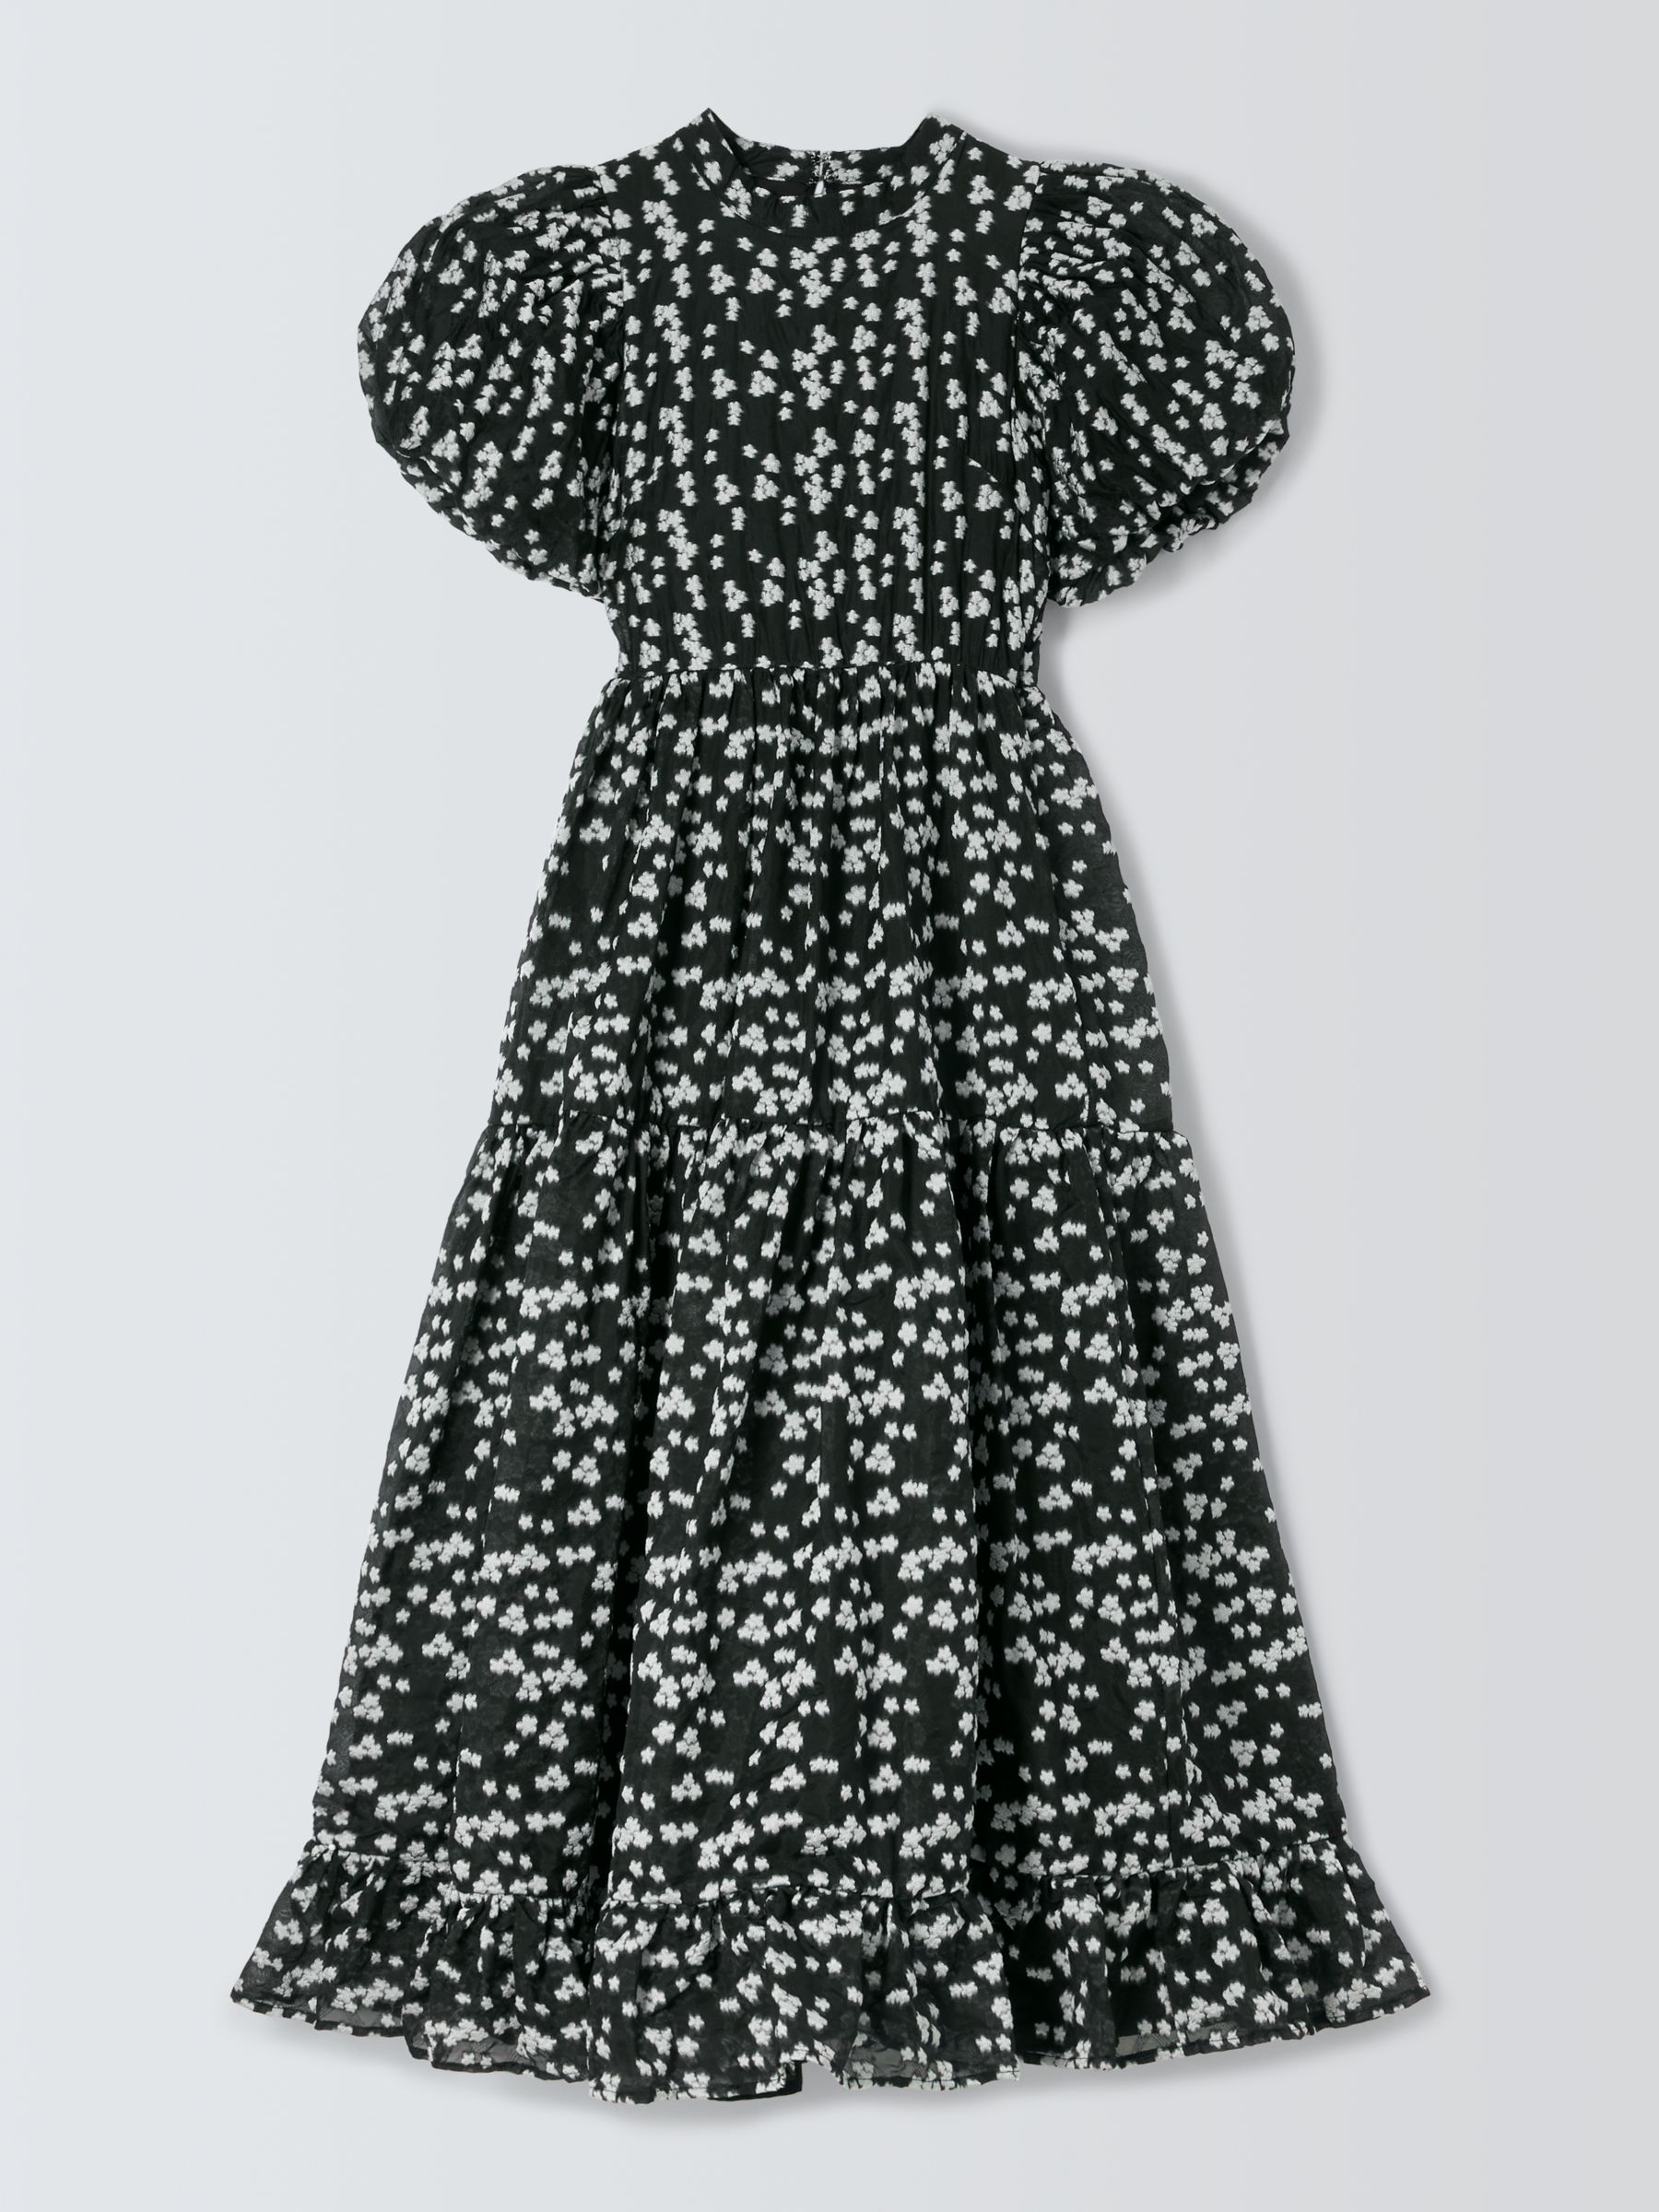 Sister Jane Dream Ditsy Floral Jacquard Midi Dress, Black, 6